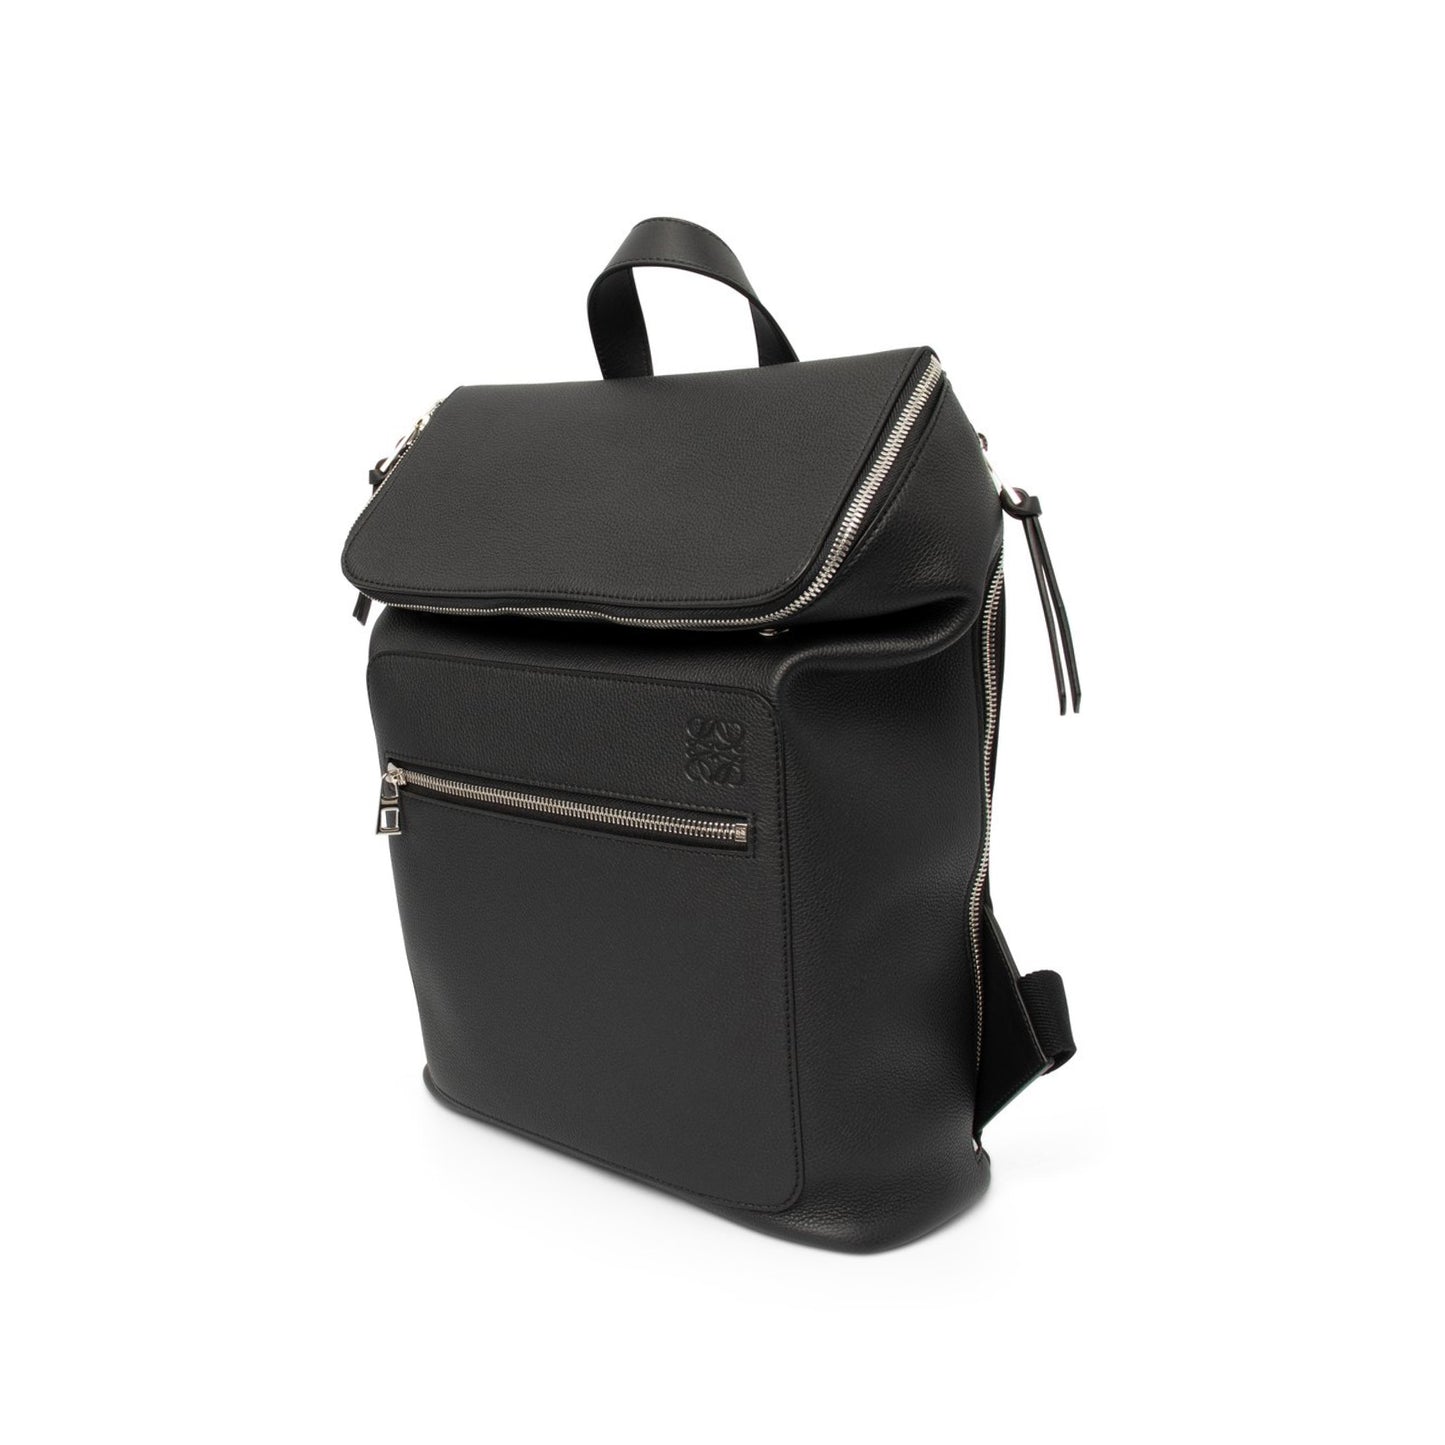 Goya Slim Backpack in Black